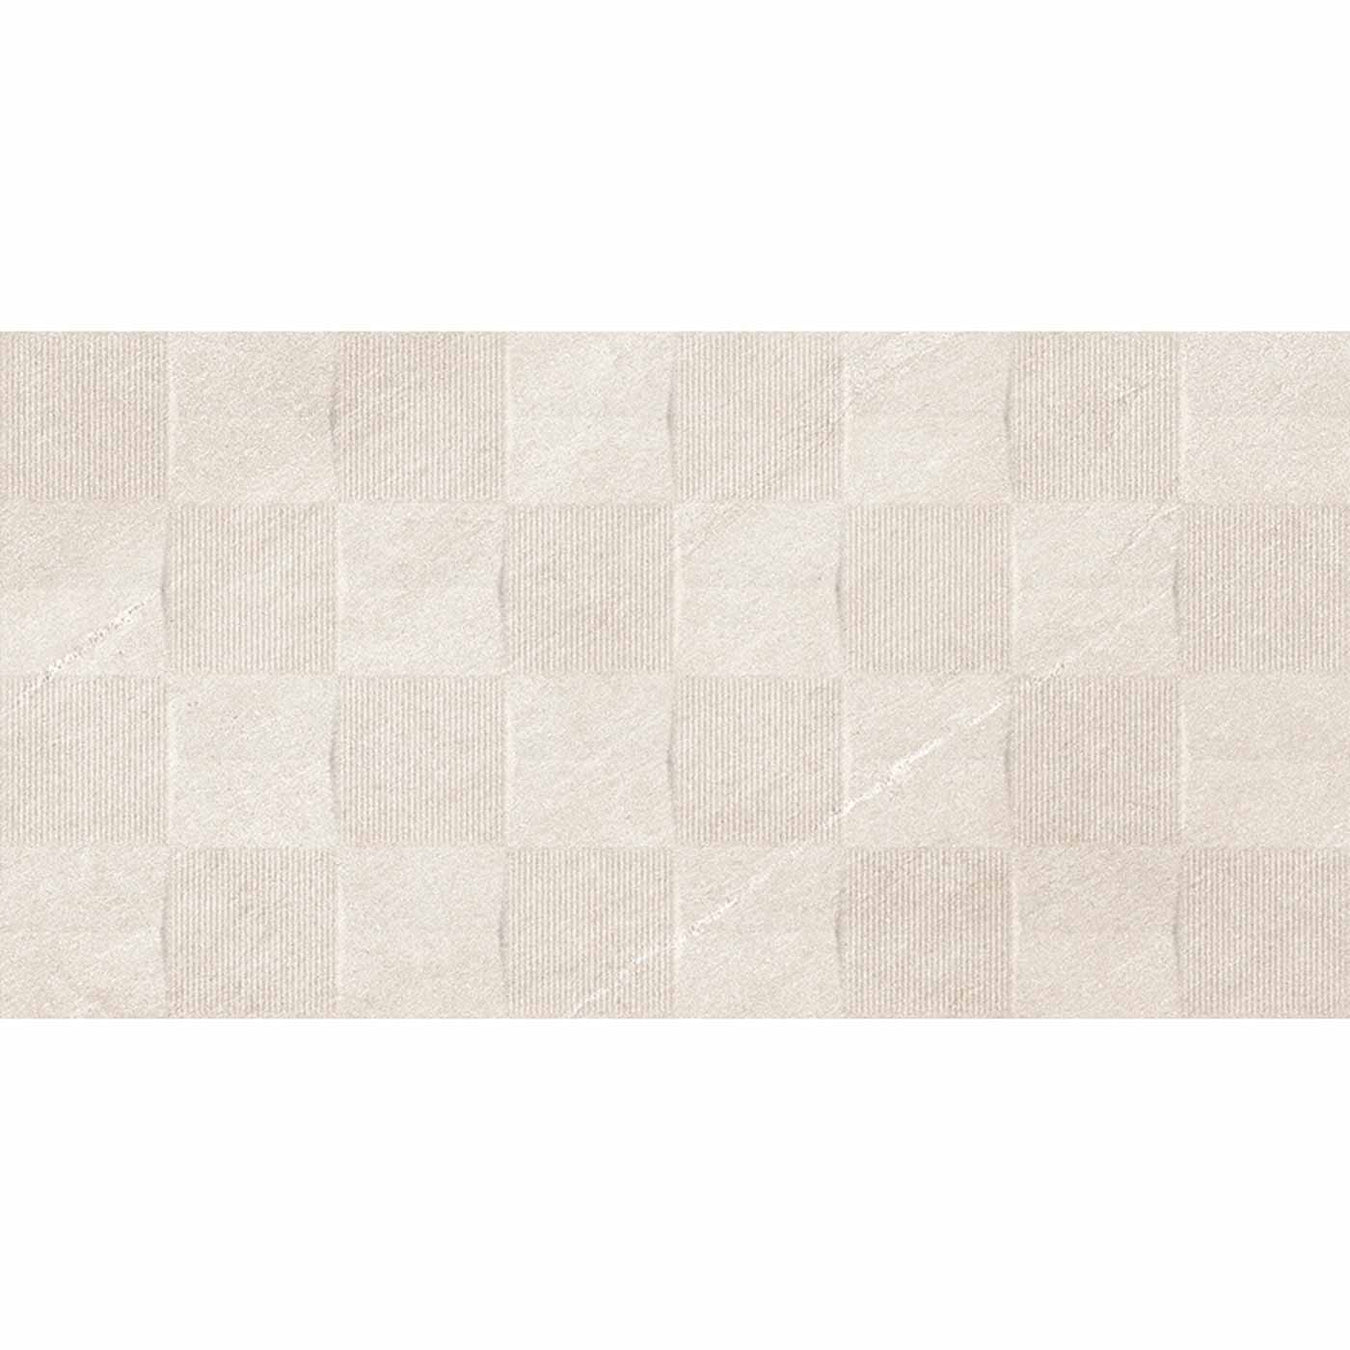 Cream bathroom tiles